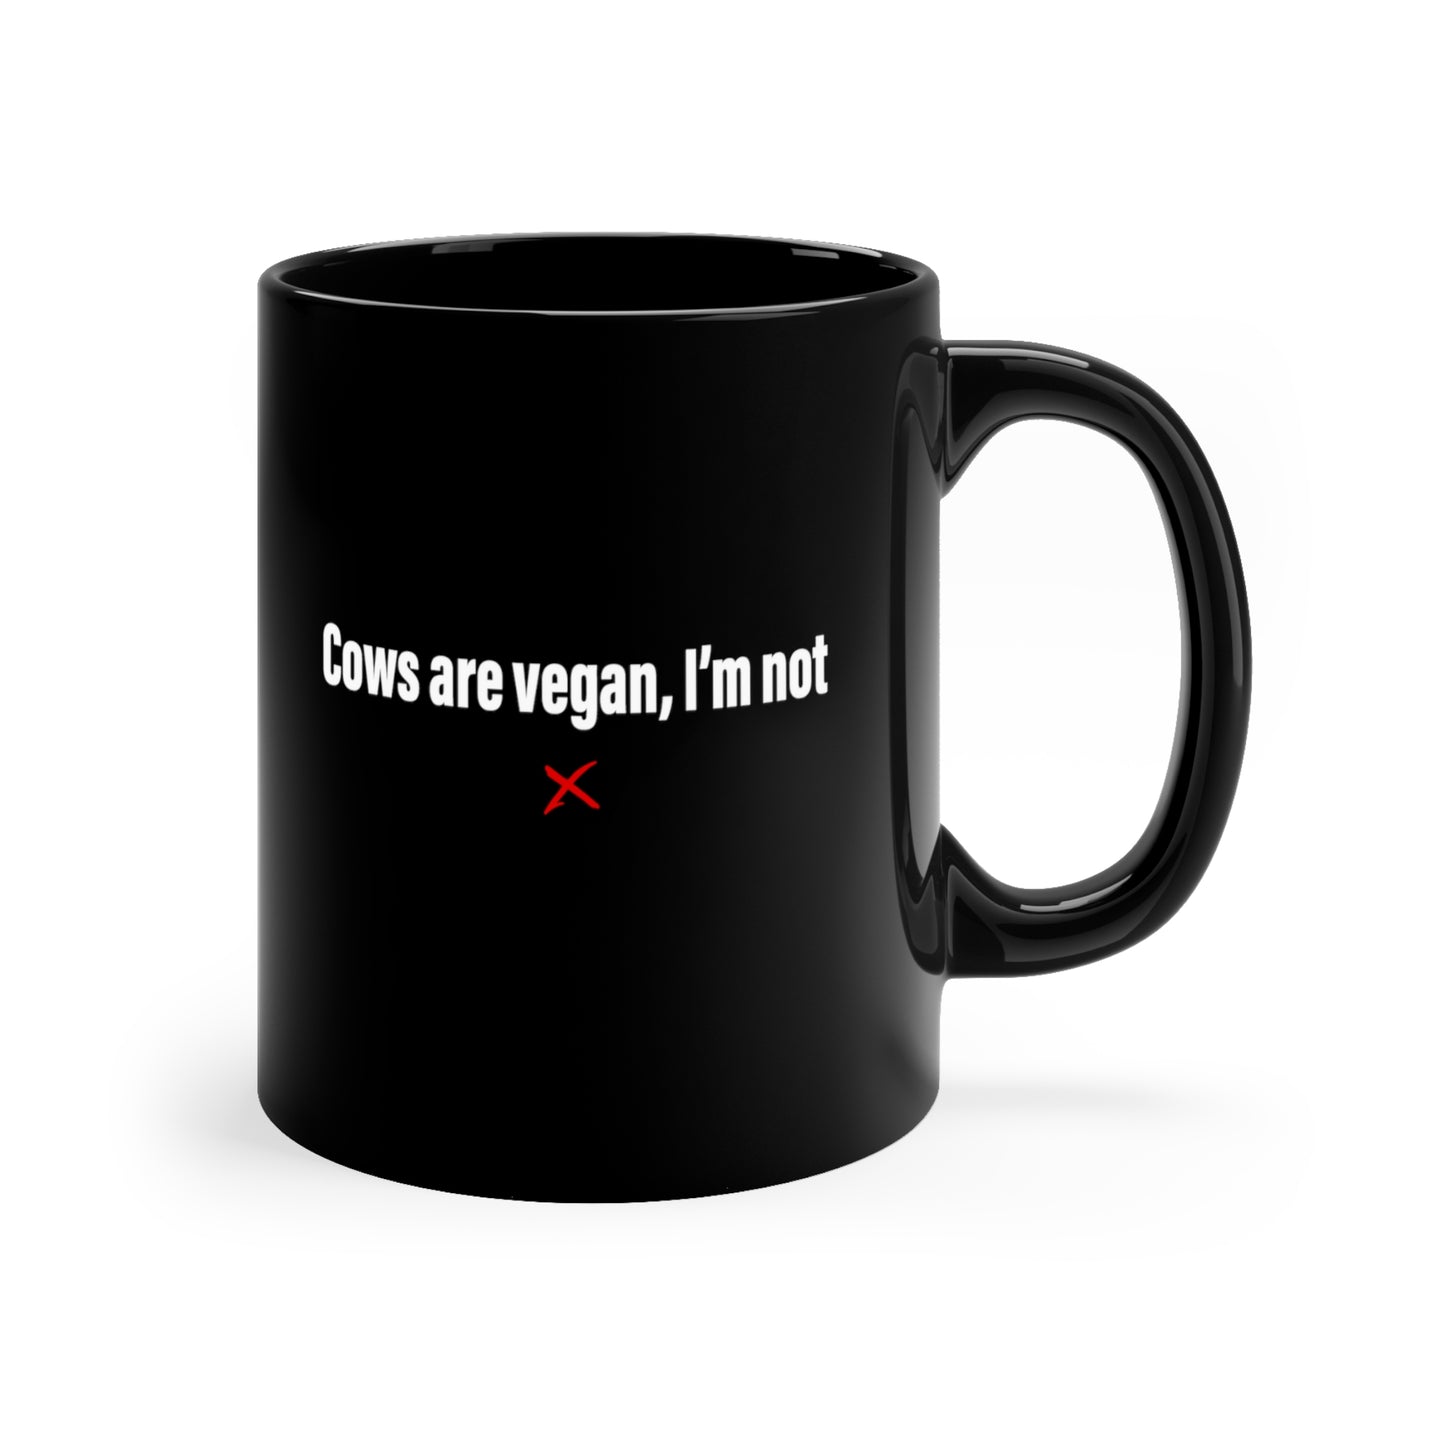 Cows are vegan, I'm not - Mug